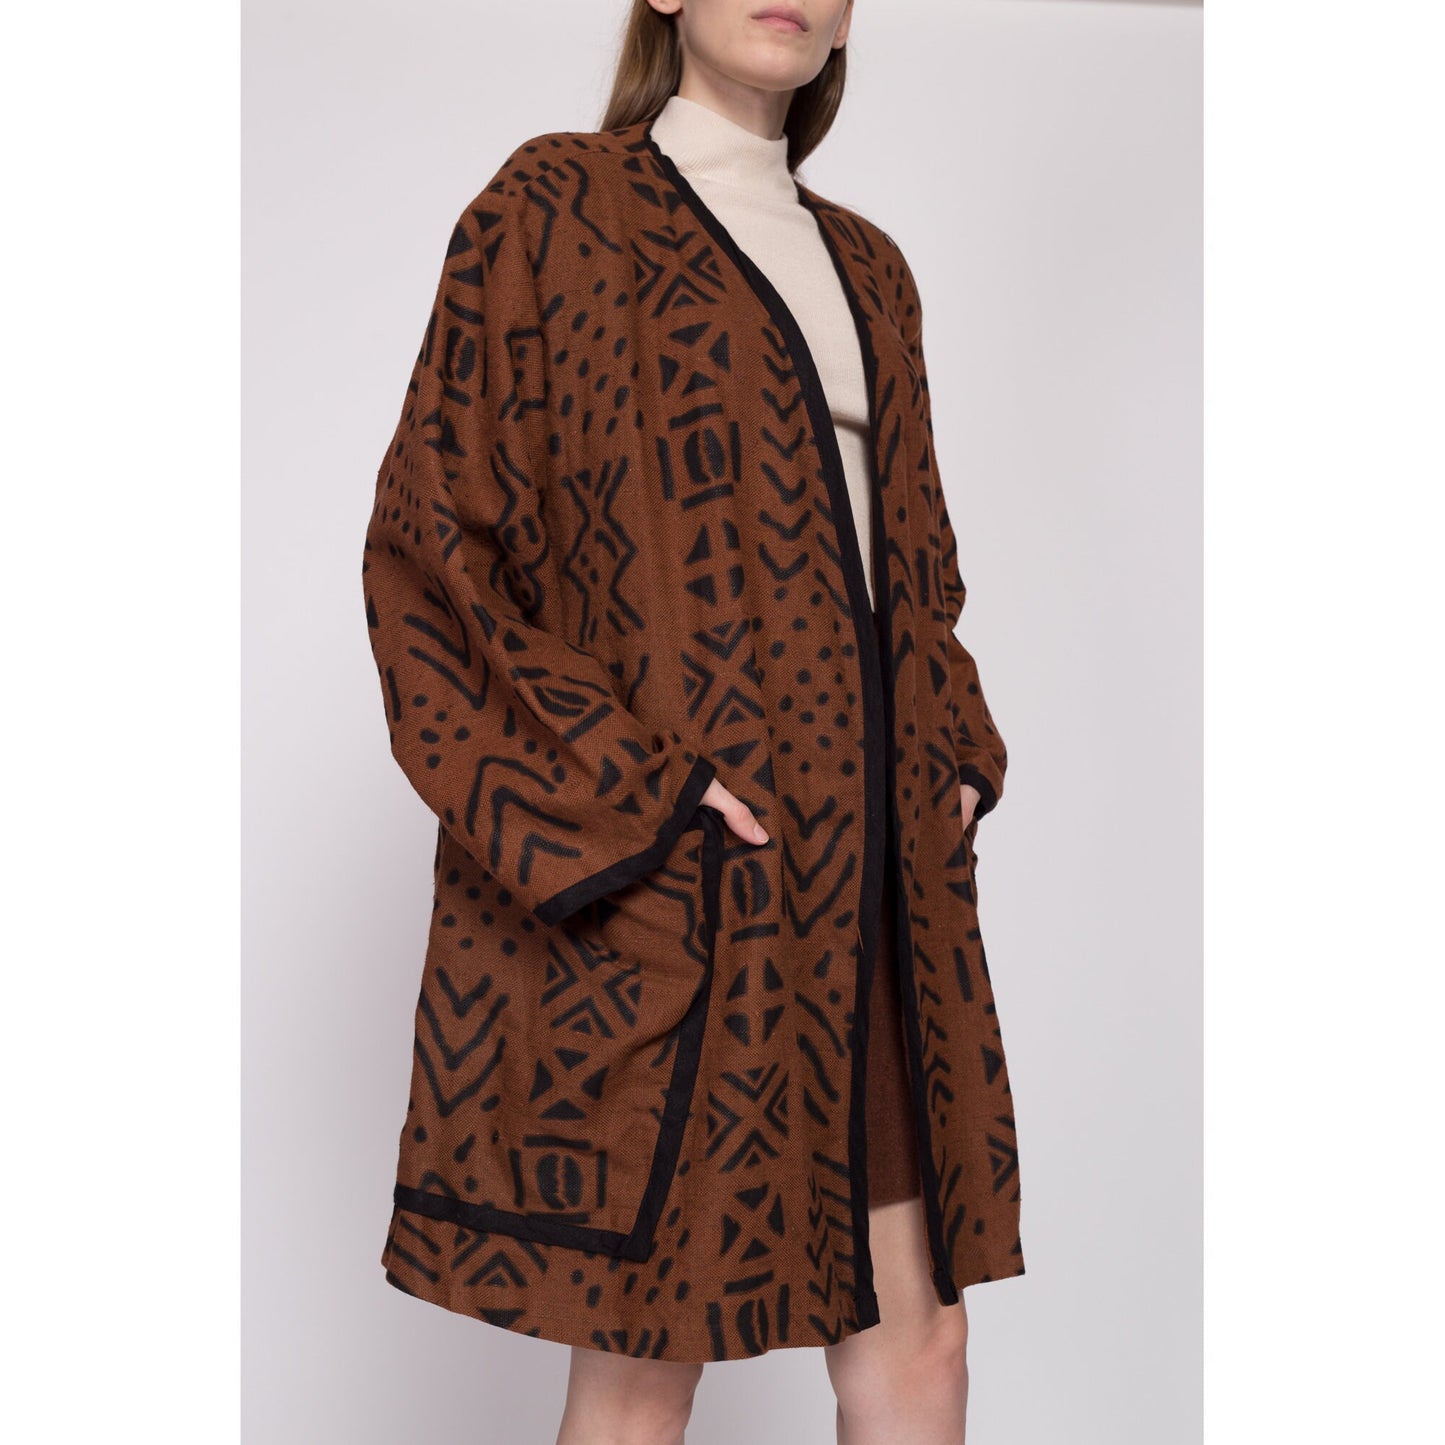 XXL| 80s Boho Brown Linen Open Fit Jacket - One Size | Vintage Fixsun Tribal Print Lightweight Coat